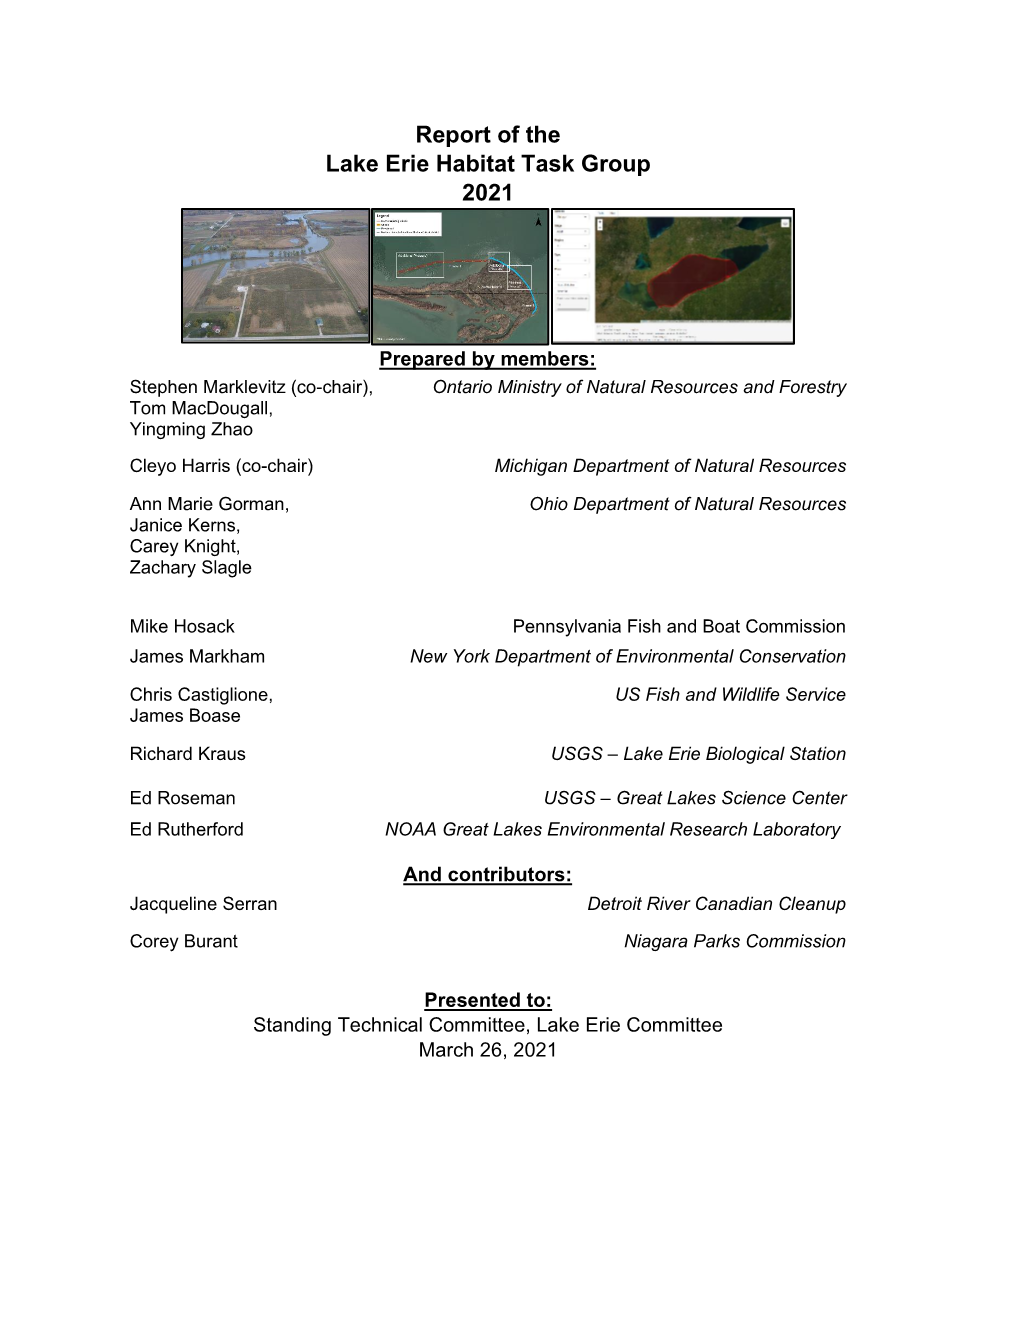 Report of the Lake Erie Habitat Task Group 2021